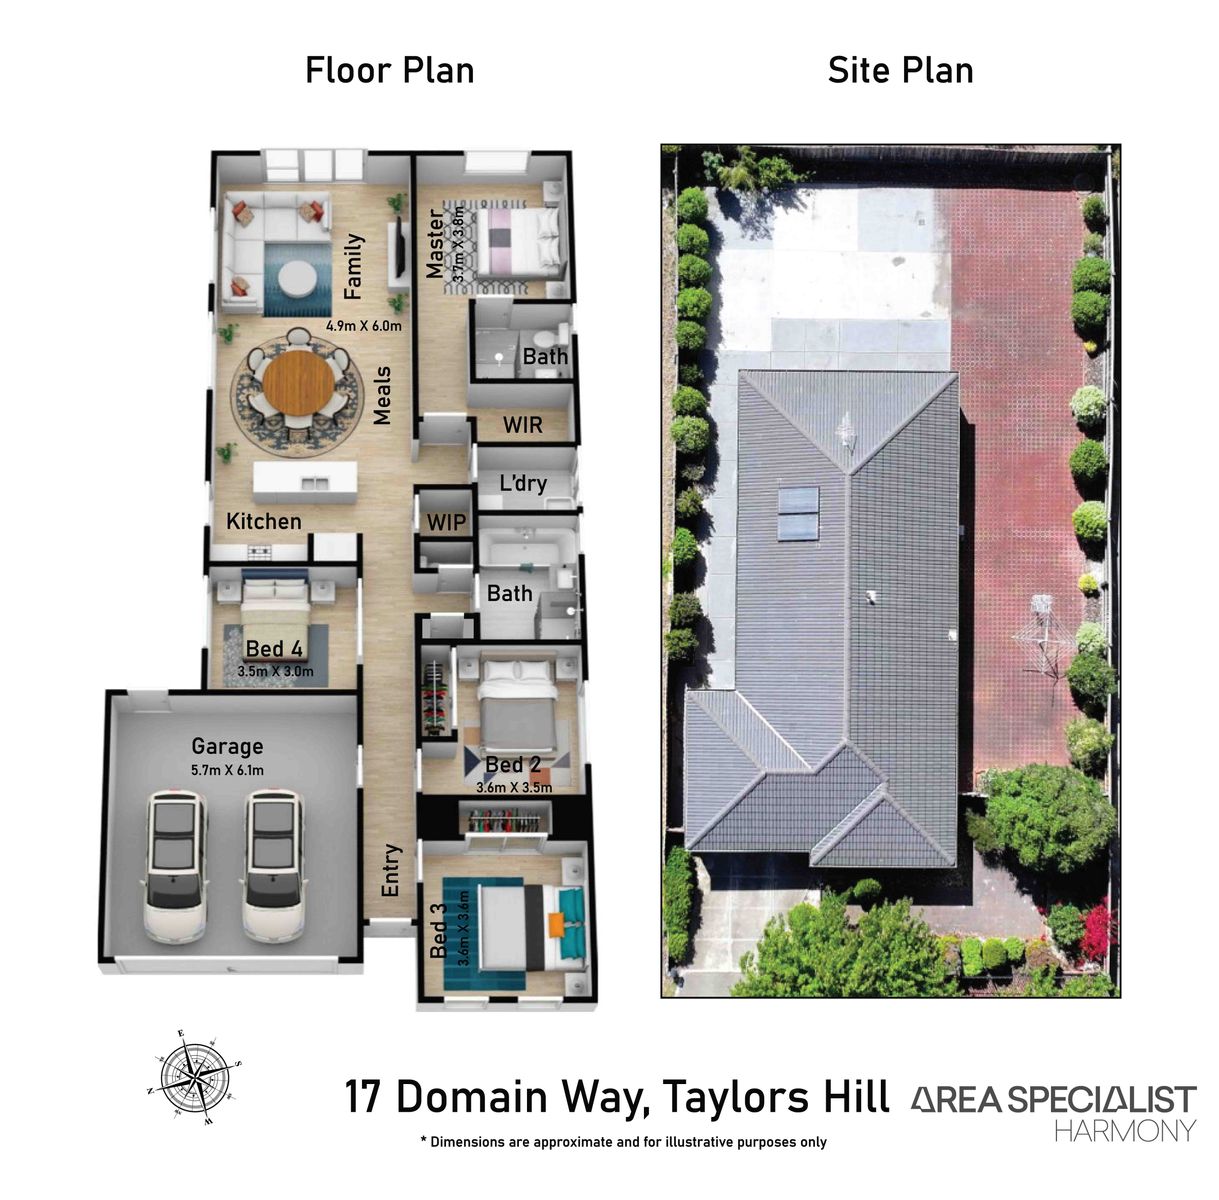 Floorplan   17 Domain Way, Taylors Hill   ASH   Vish